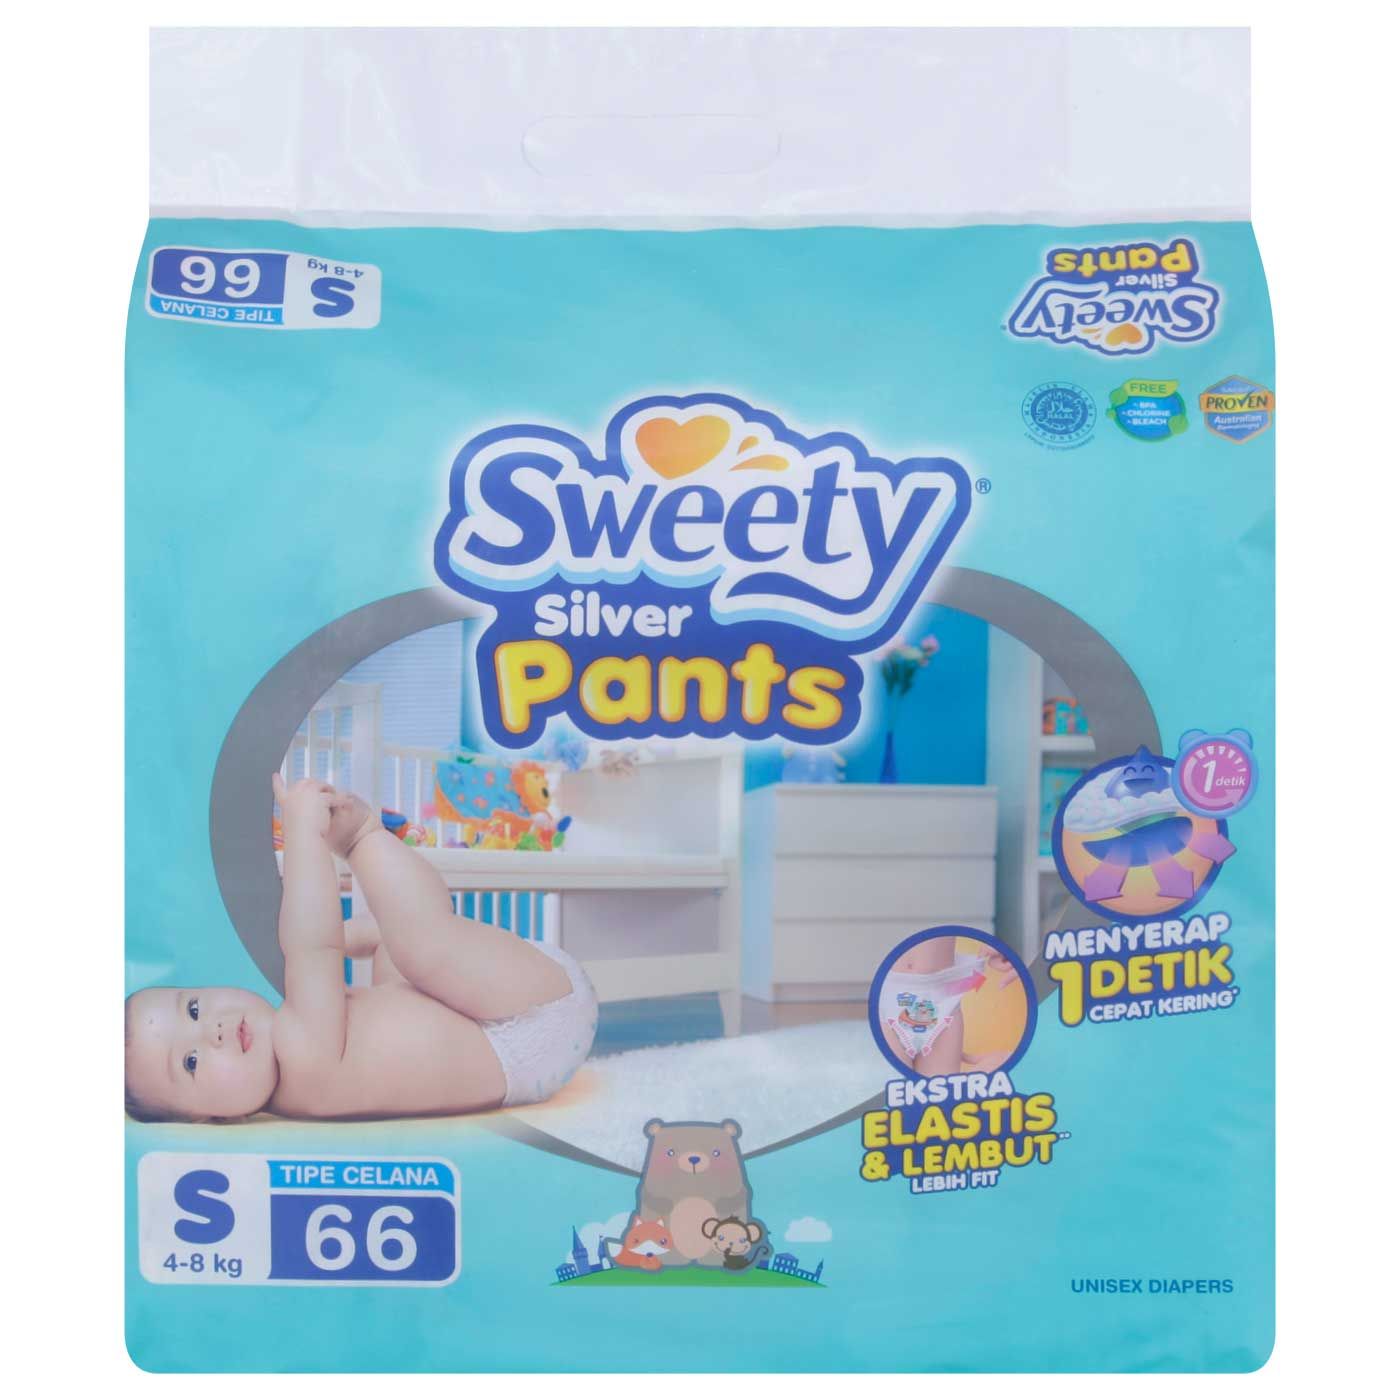 Sweety Silver Pants S 66's - 1